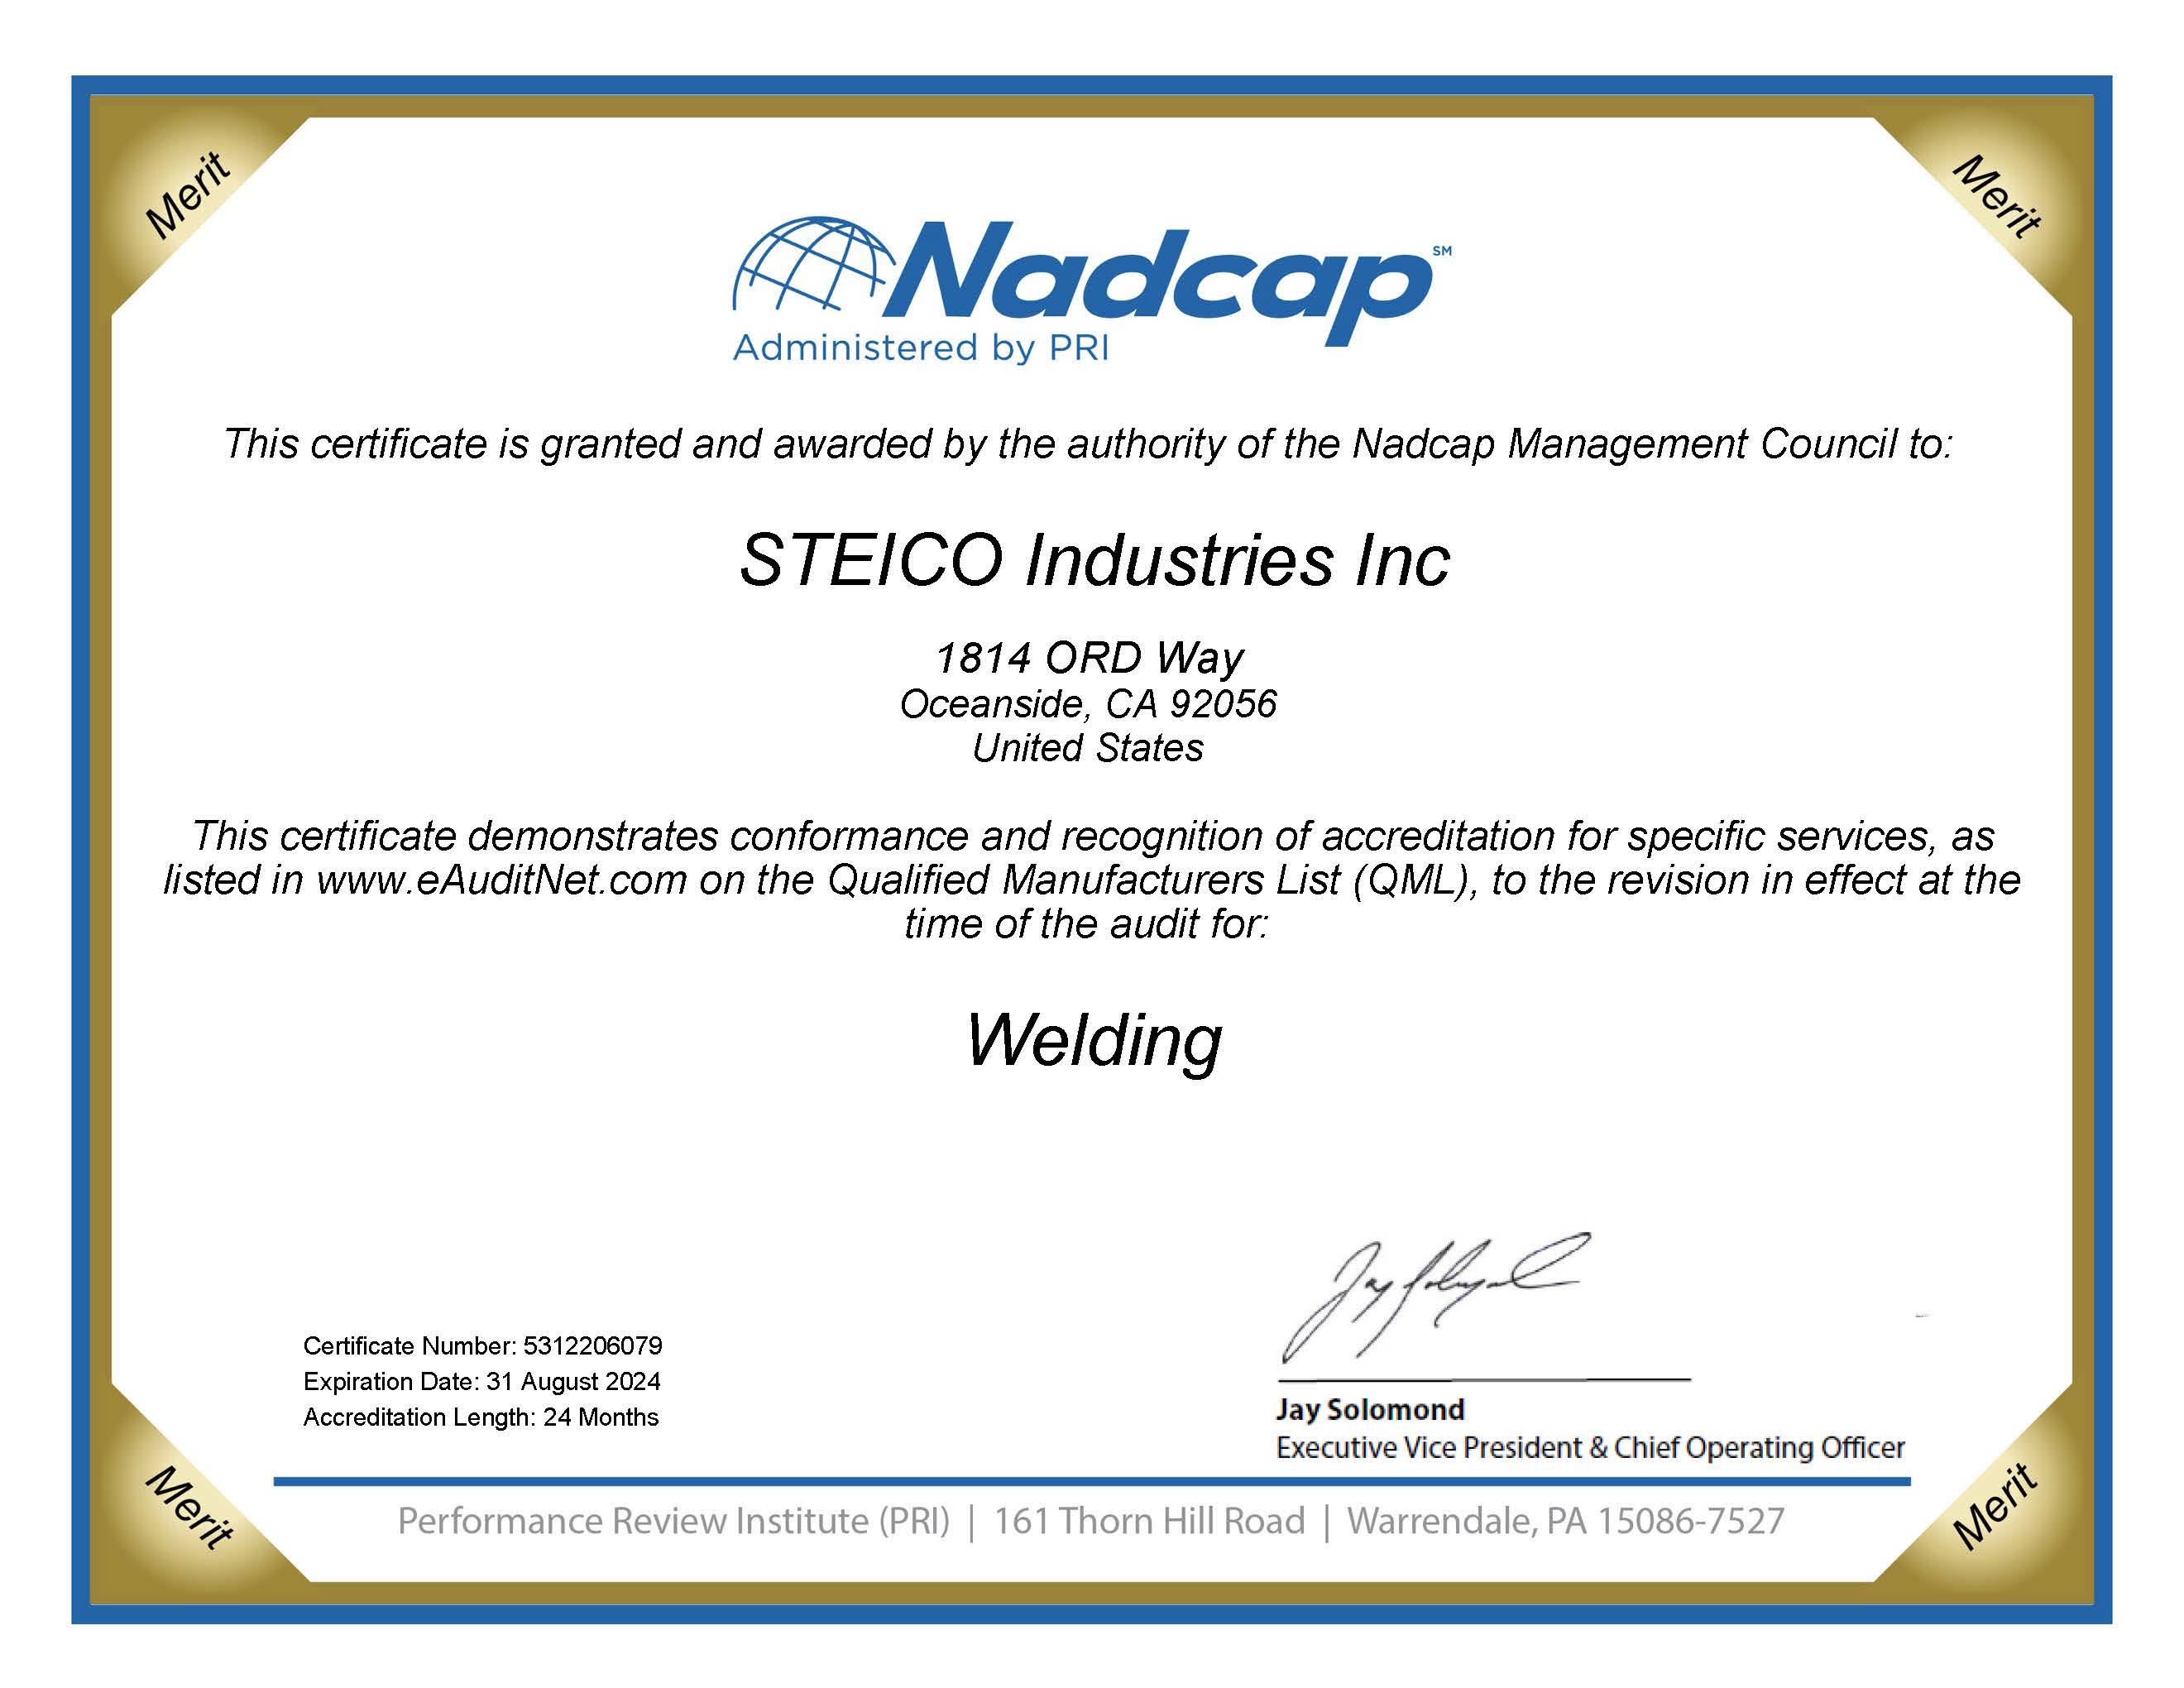 Nadcap Certificates